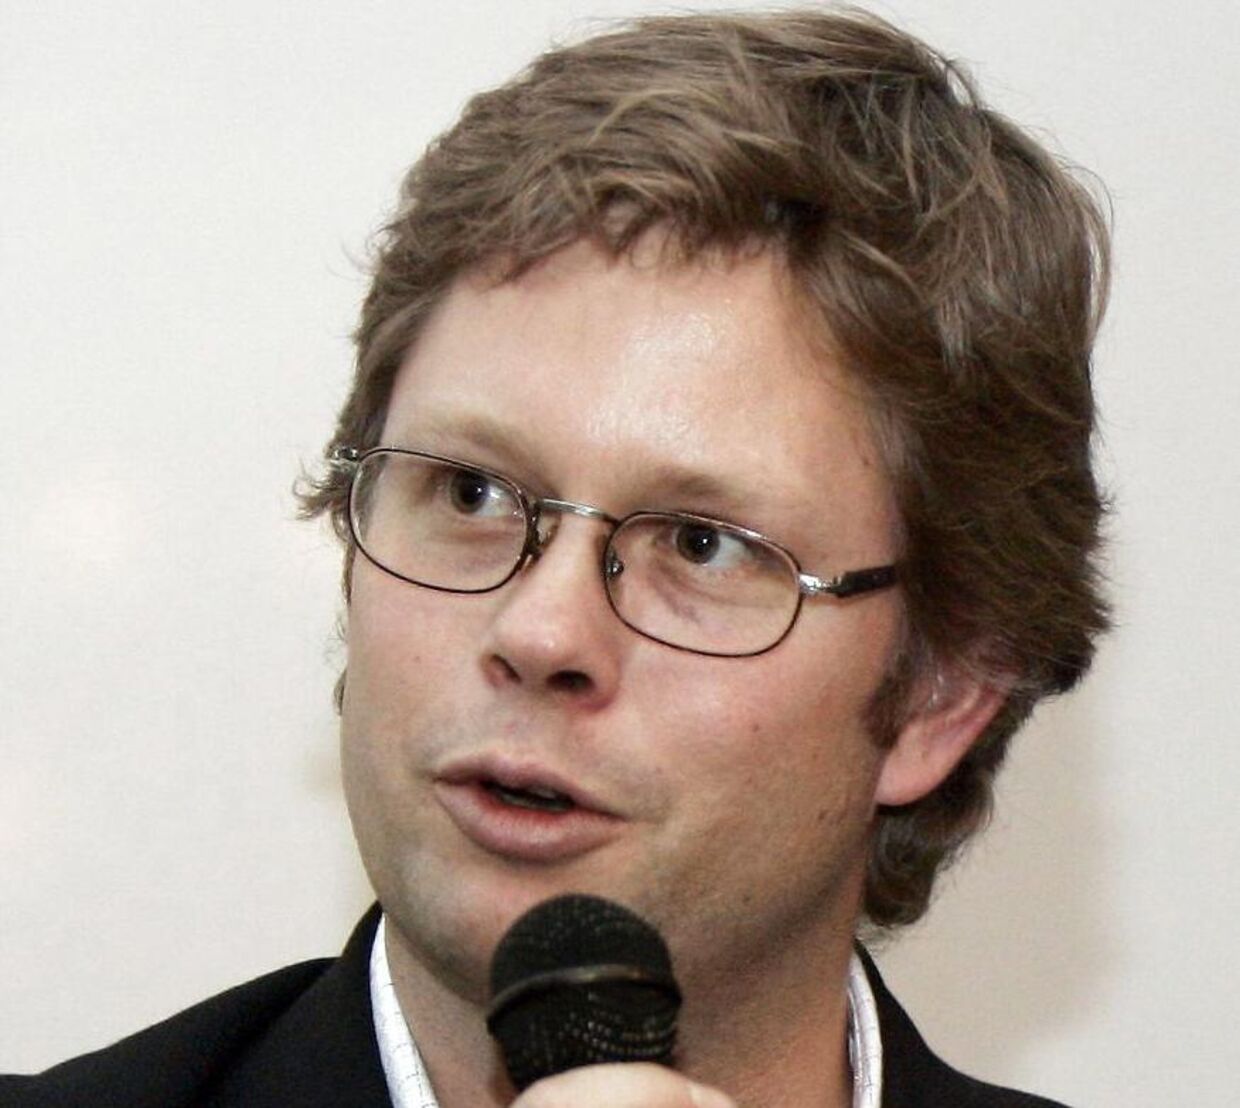 Den norske journalist fra Dagbladet Carsten Thomassen døde under et angreb i Kabul.